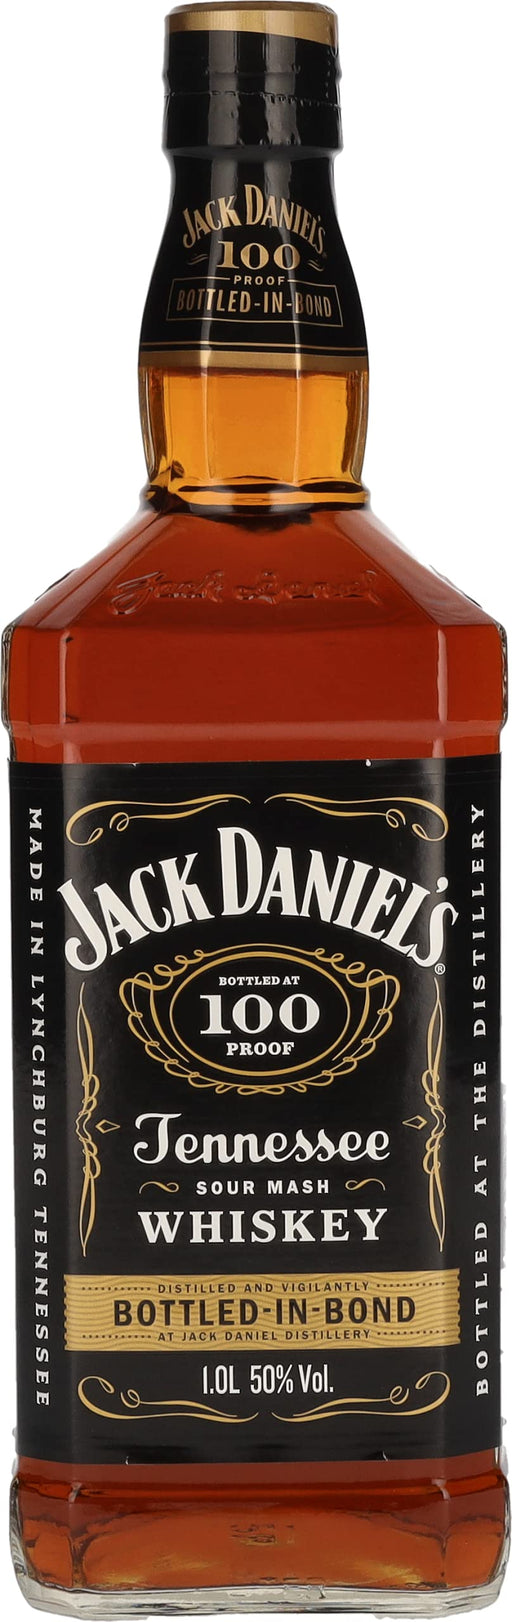 Jack Daniels Bottled in Bond 1000mL  Visit the Jack Daniel's Store